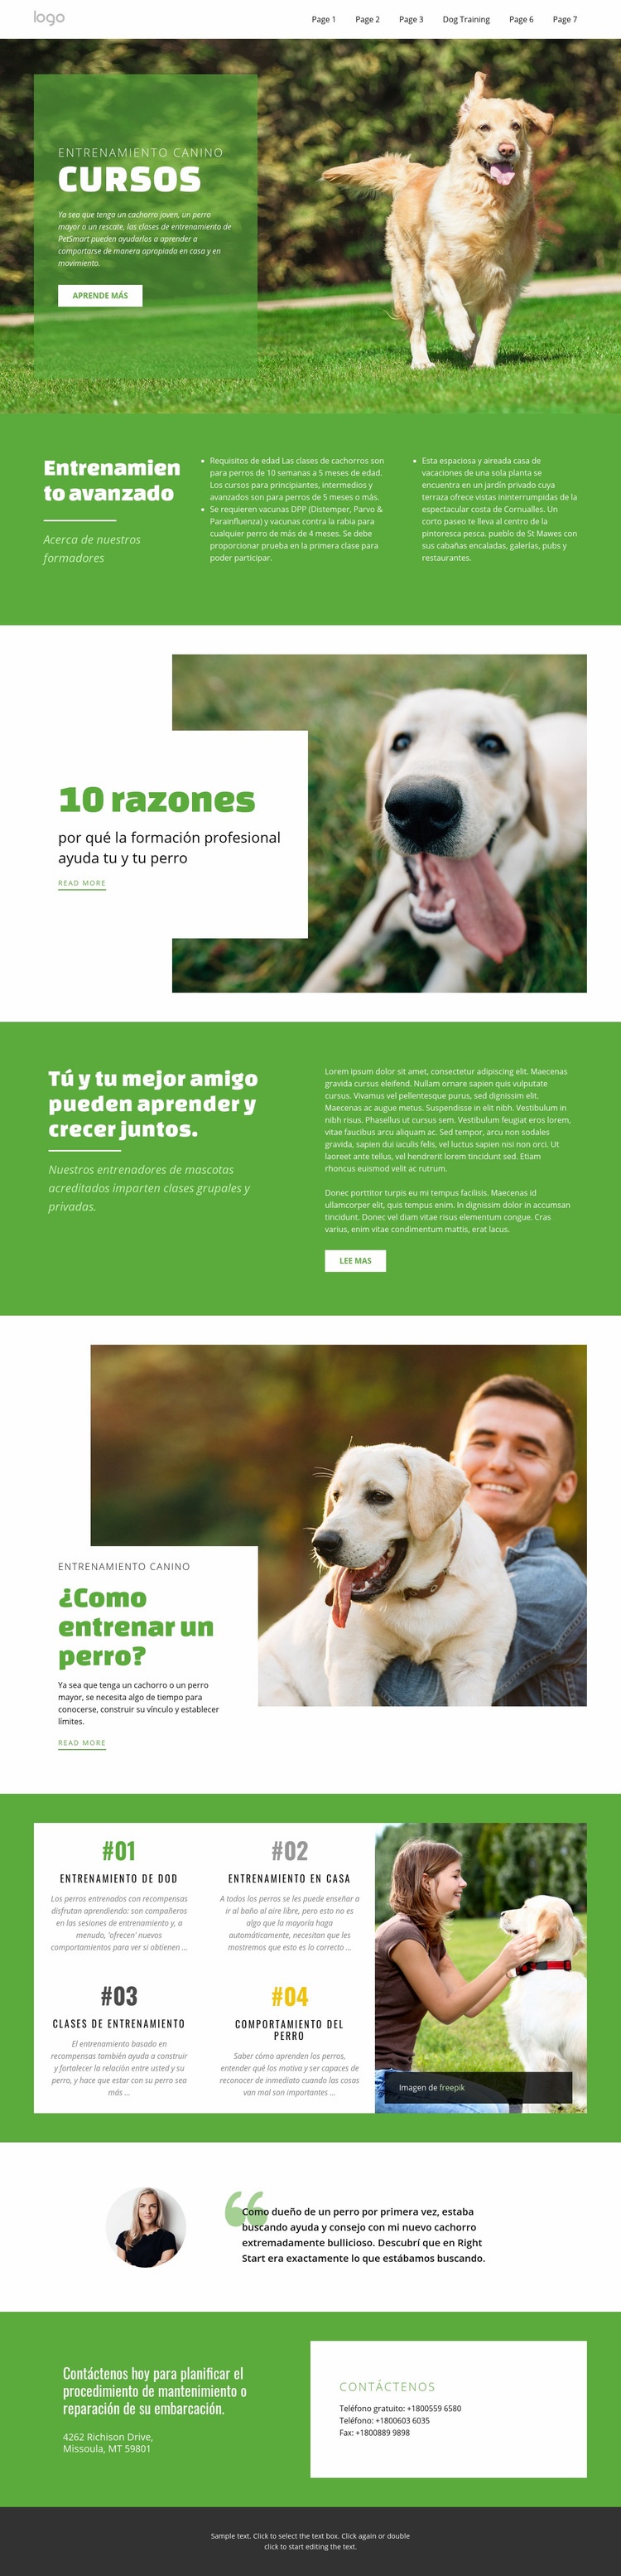 Cursos de formación para mascotas Plantilla HTML5